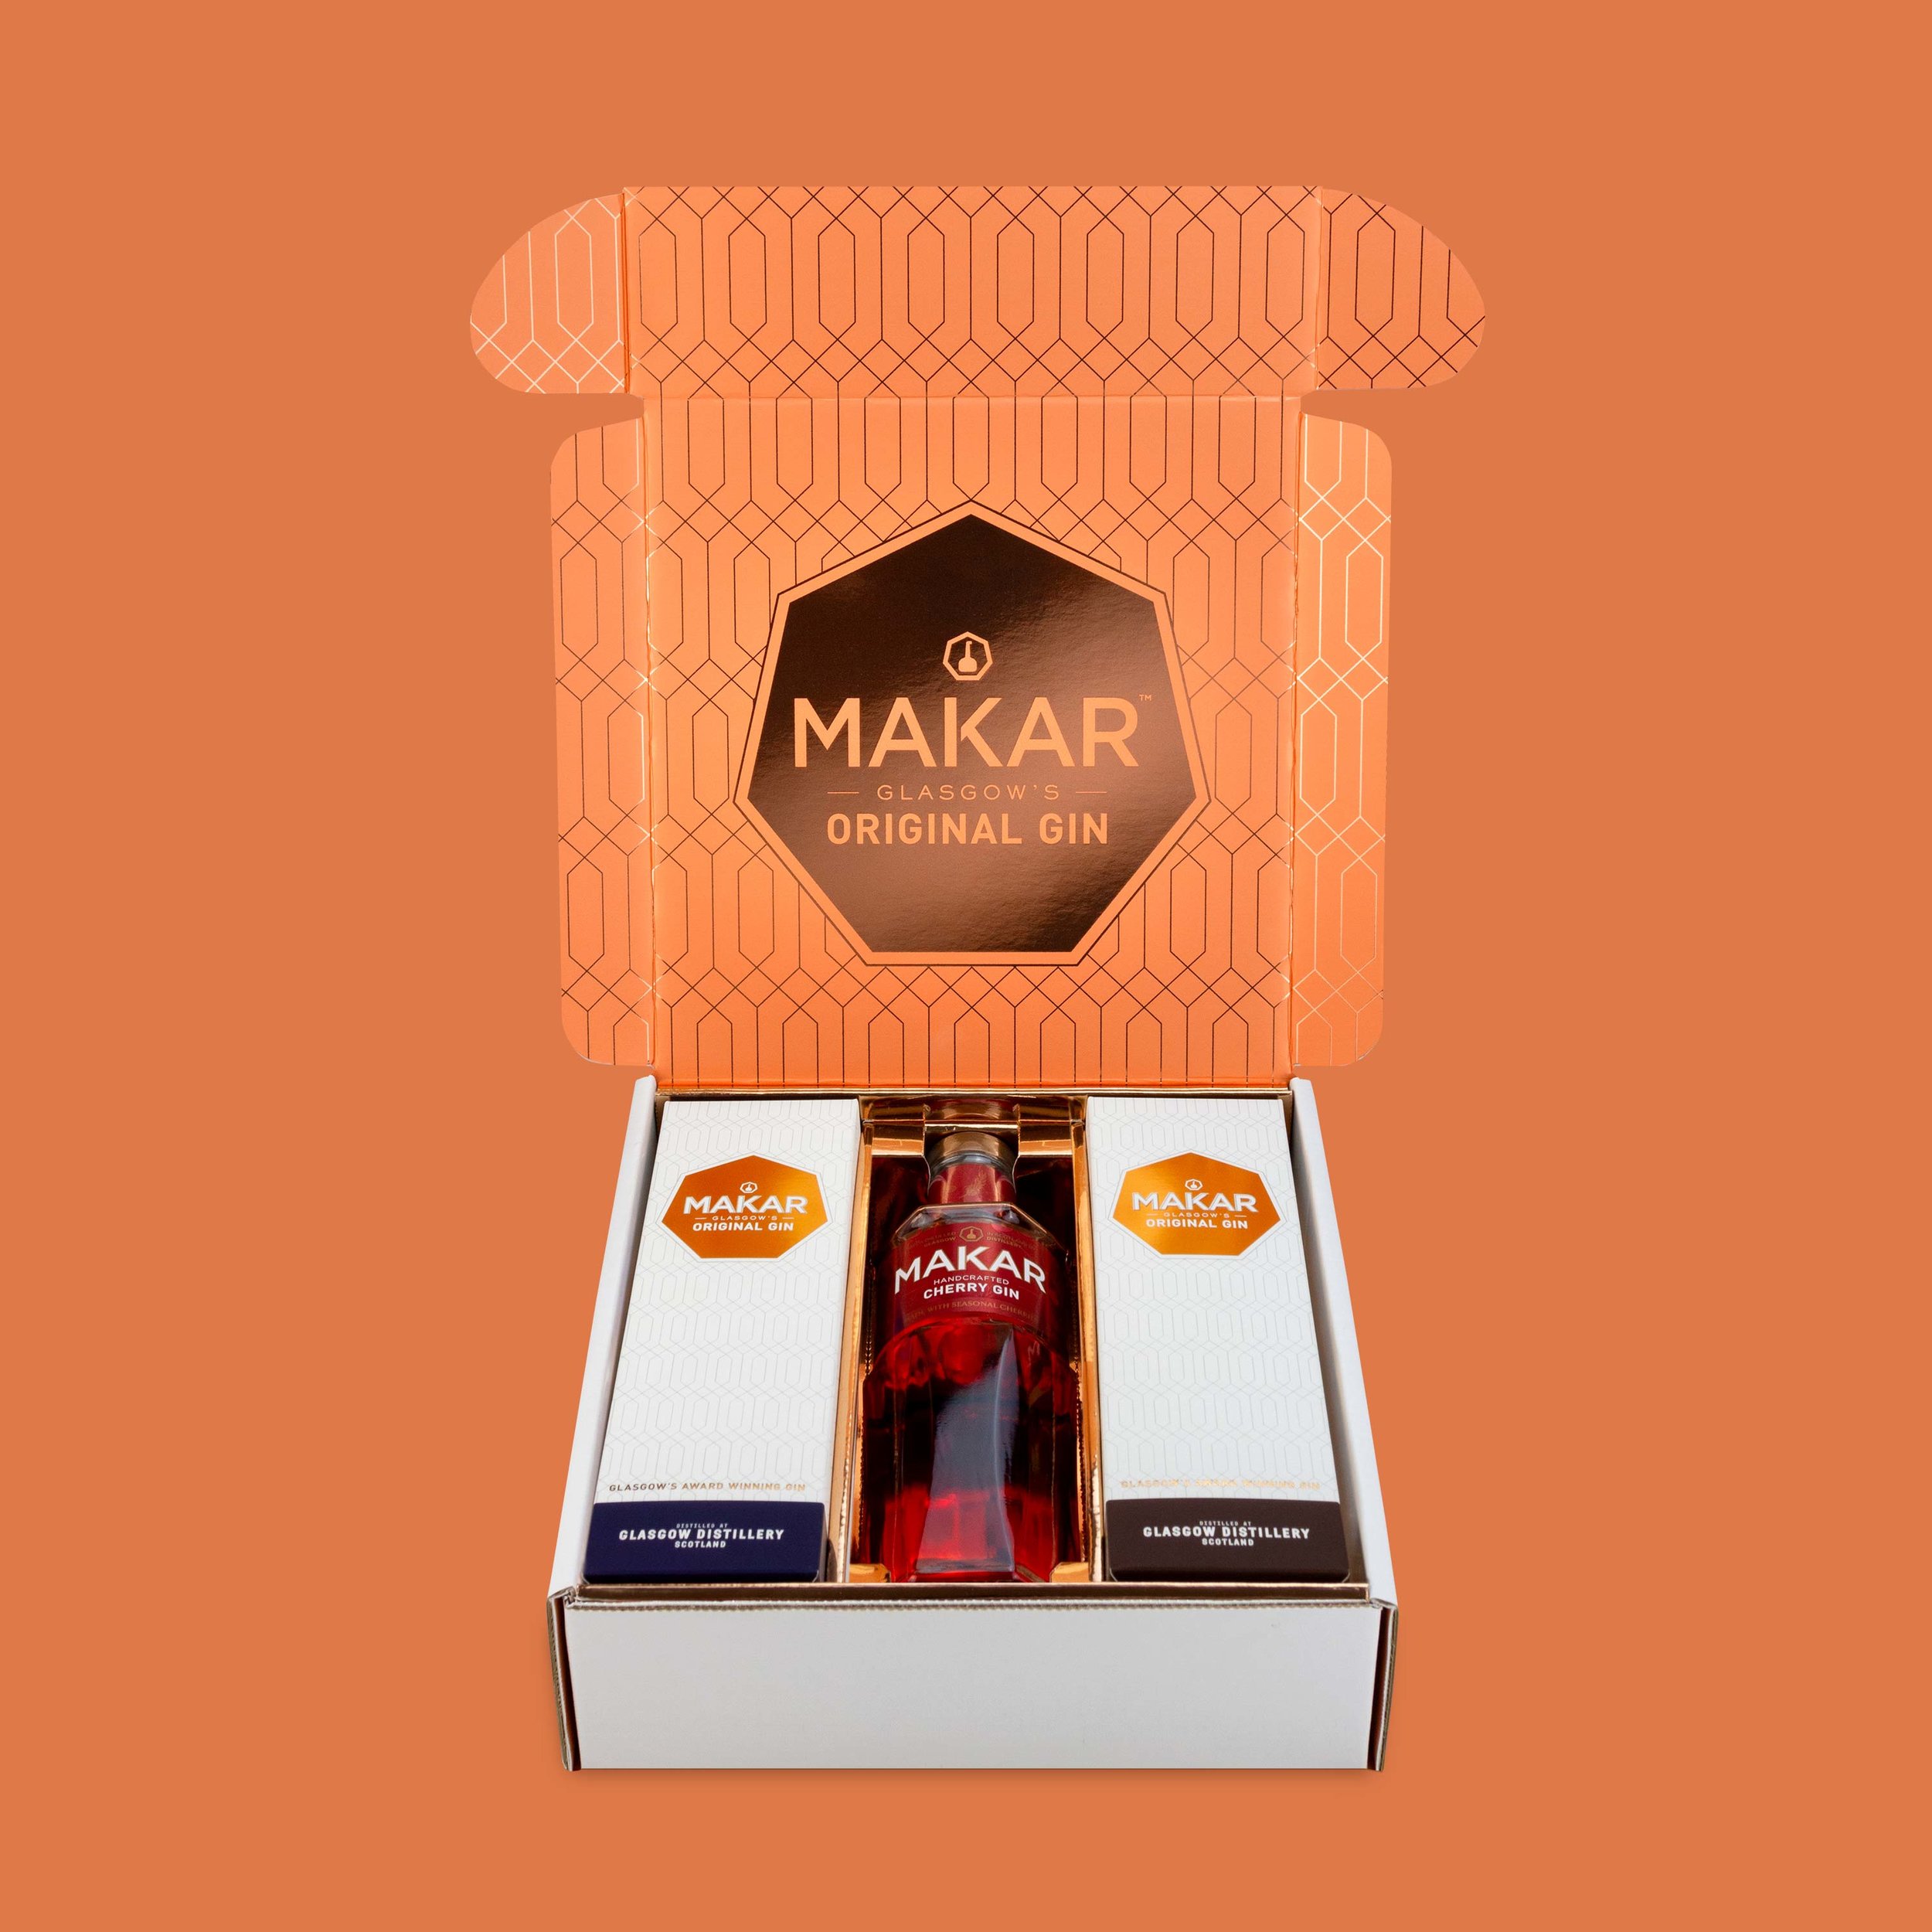 Makar-Gin-Wow-Box-Packaging-Design-Prototype-02.jpg